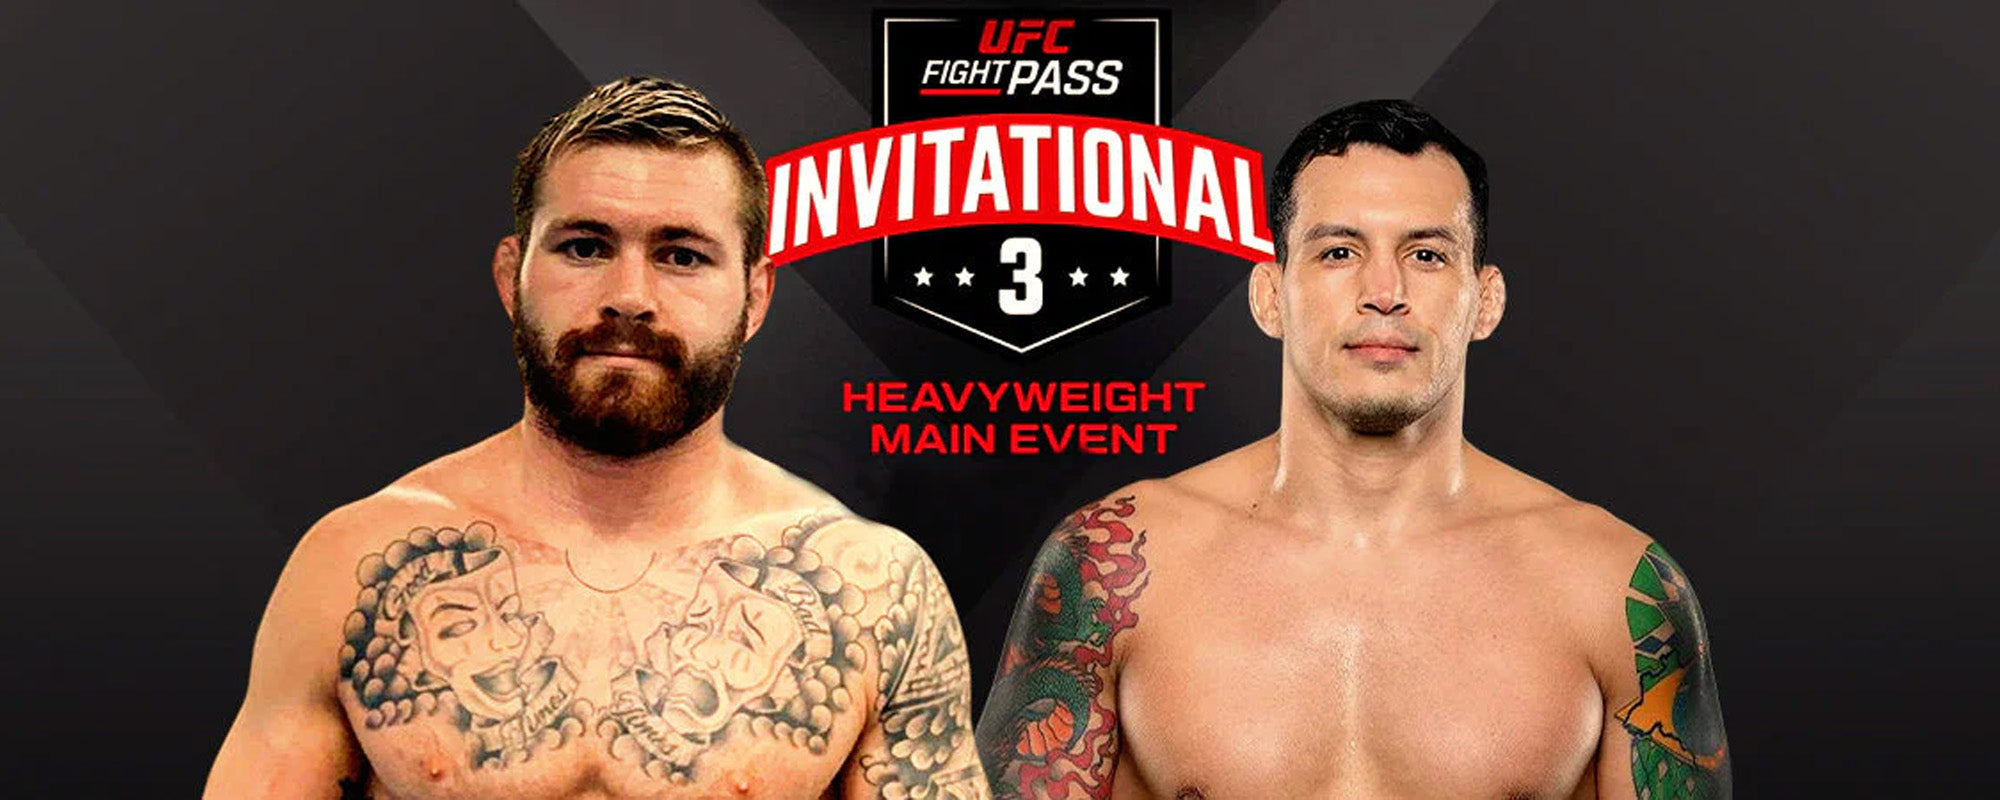 Gordon Ryan vs. Vinny Magalhaes booked for UFC Fight Pass Invitational 3